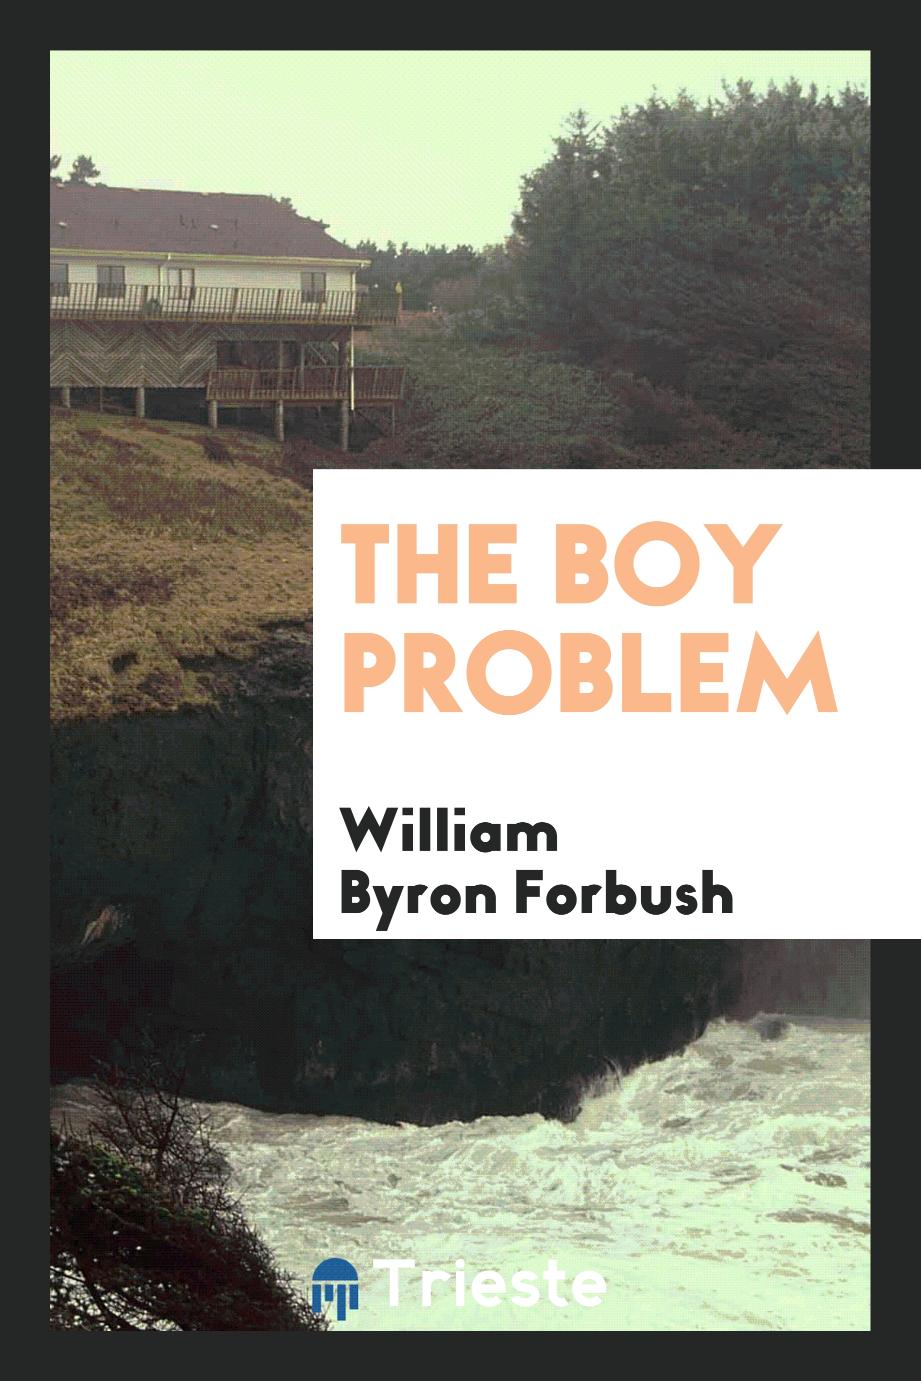 The boy problem